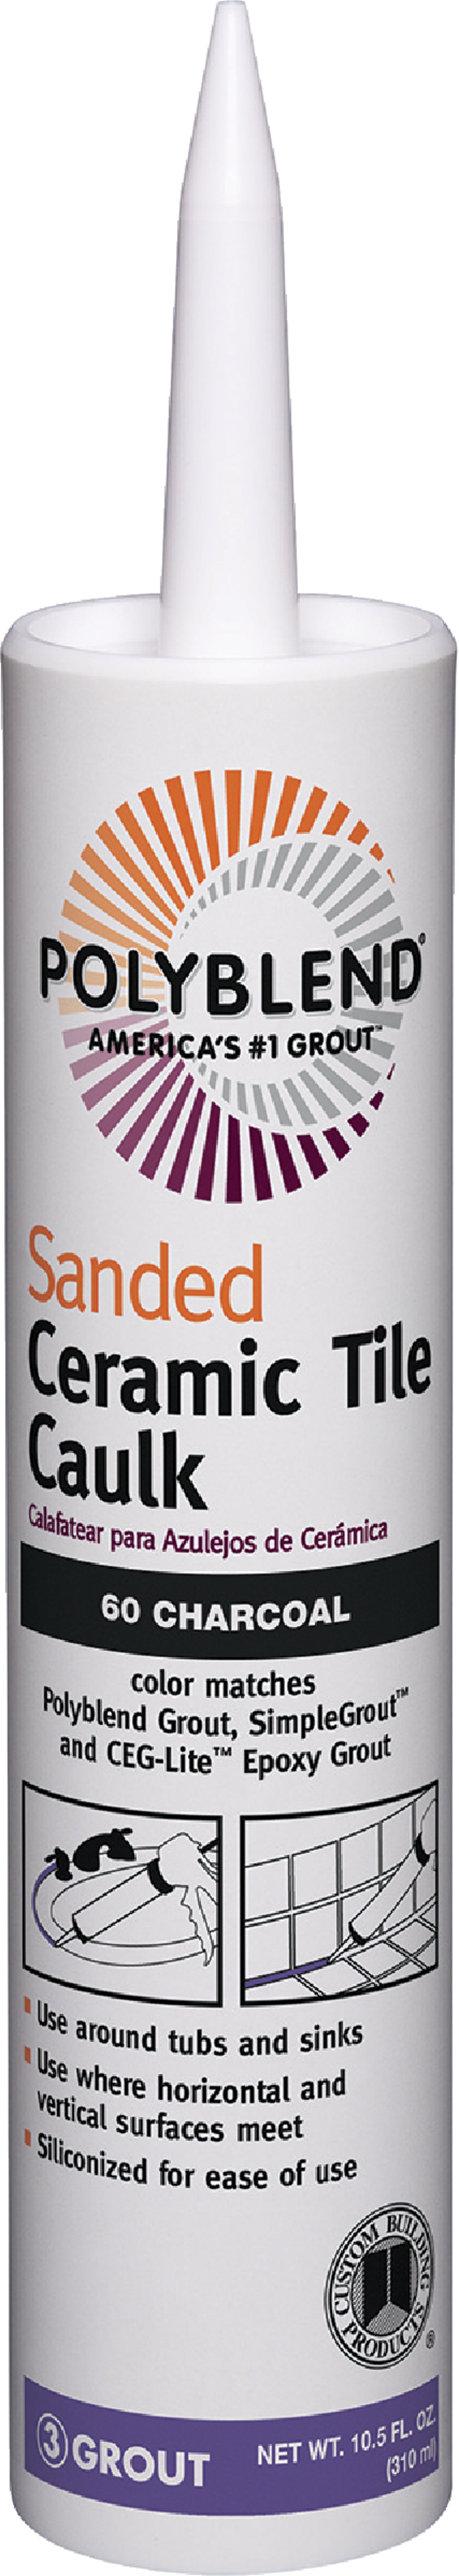 Polyblend Ceramic Tile Caulk 10 5 Oz, How To Apply Ceramic Tile Caulk